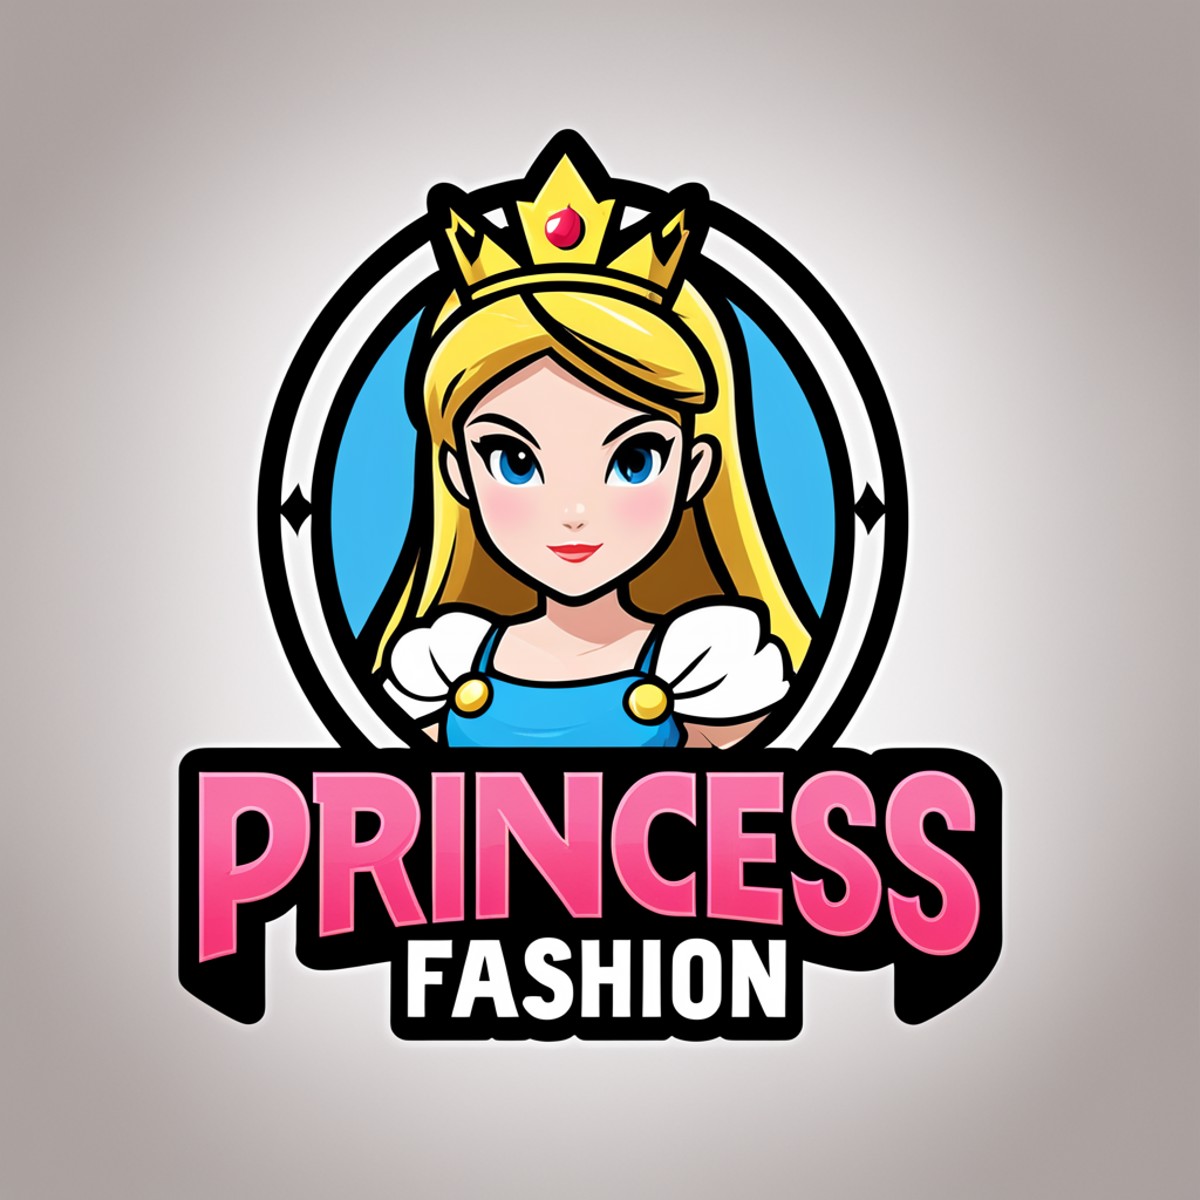 logomkrdsxl, a logo for a clothing store ,  vector, text "Princess Fashion",  <lora:logomkrdsxl:1>, best quality, masterpi...